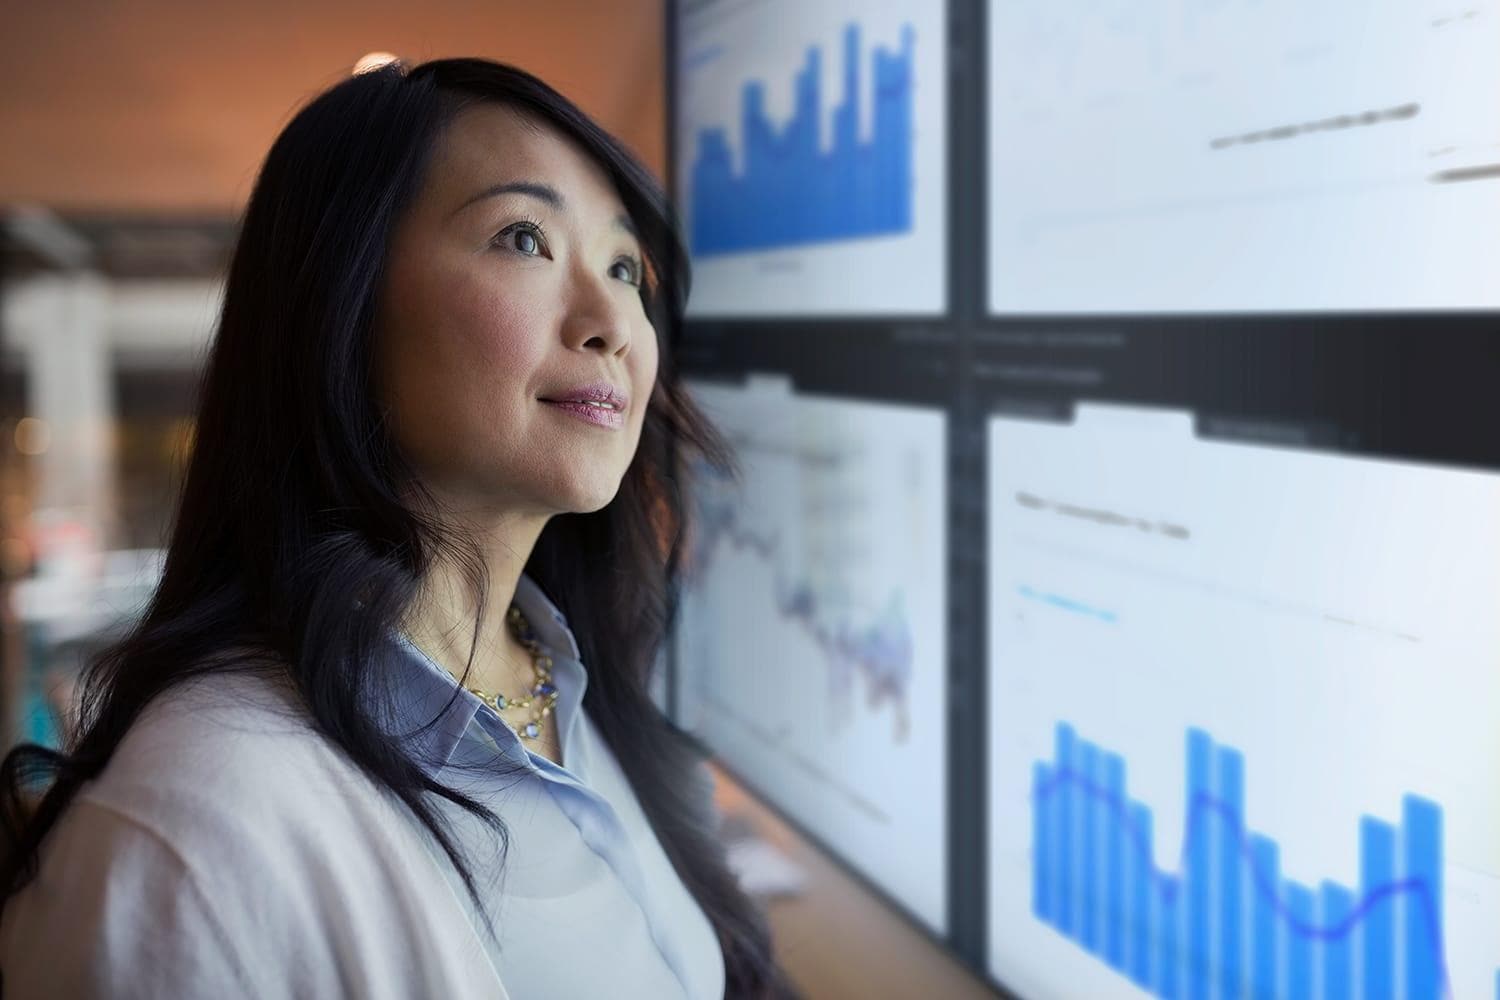 Asian woman views SAS data visualizations on large display